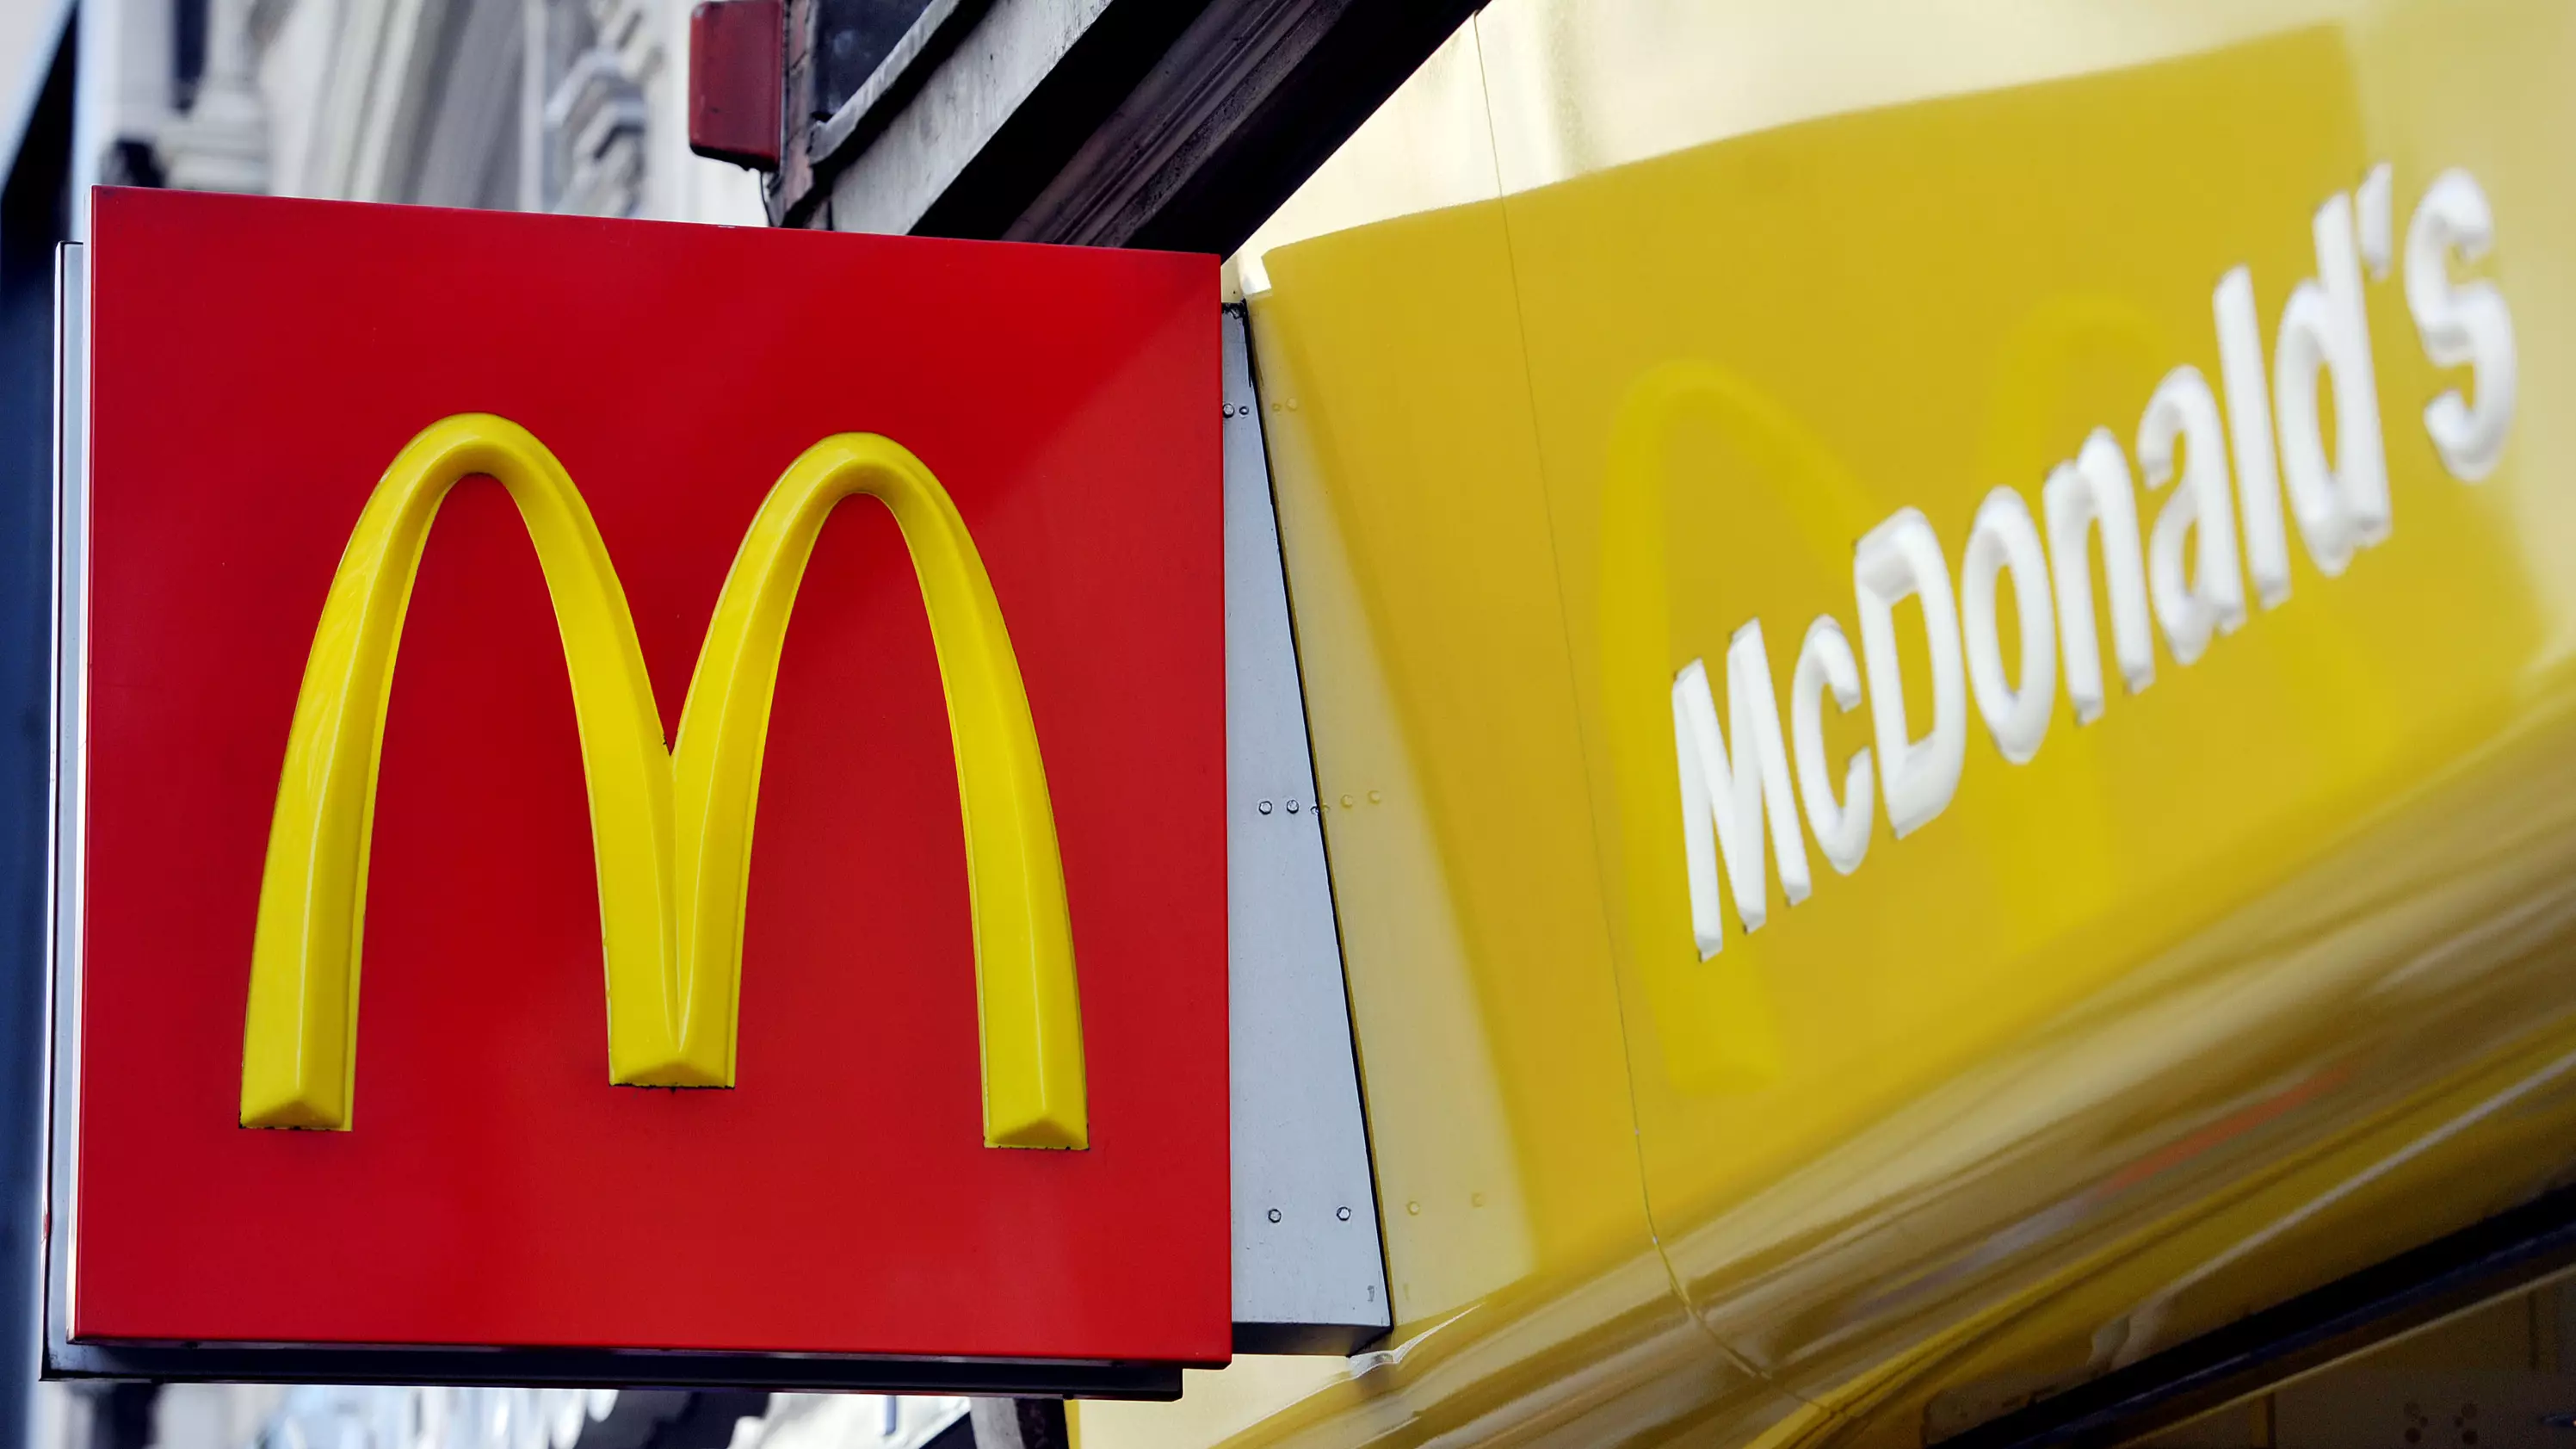 McDonald’s Milkshake Fans Devastated By National Supply Shortage